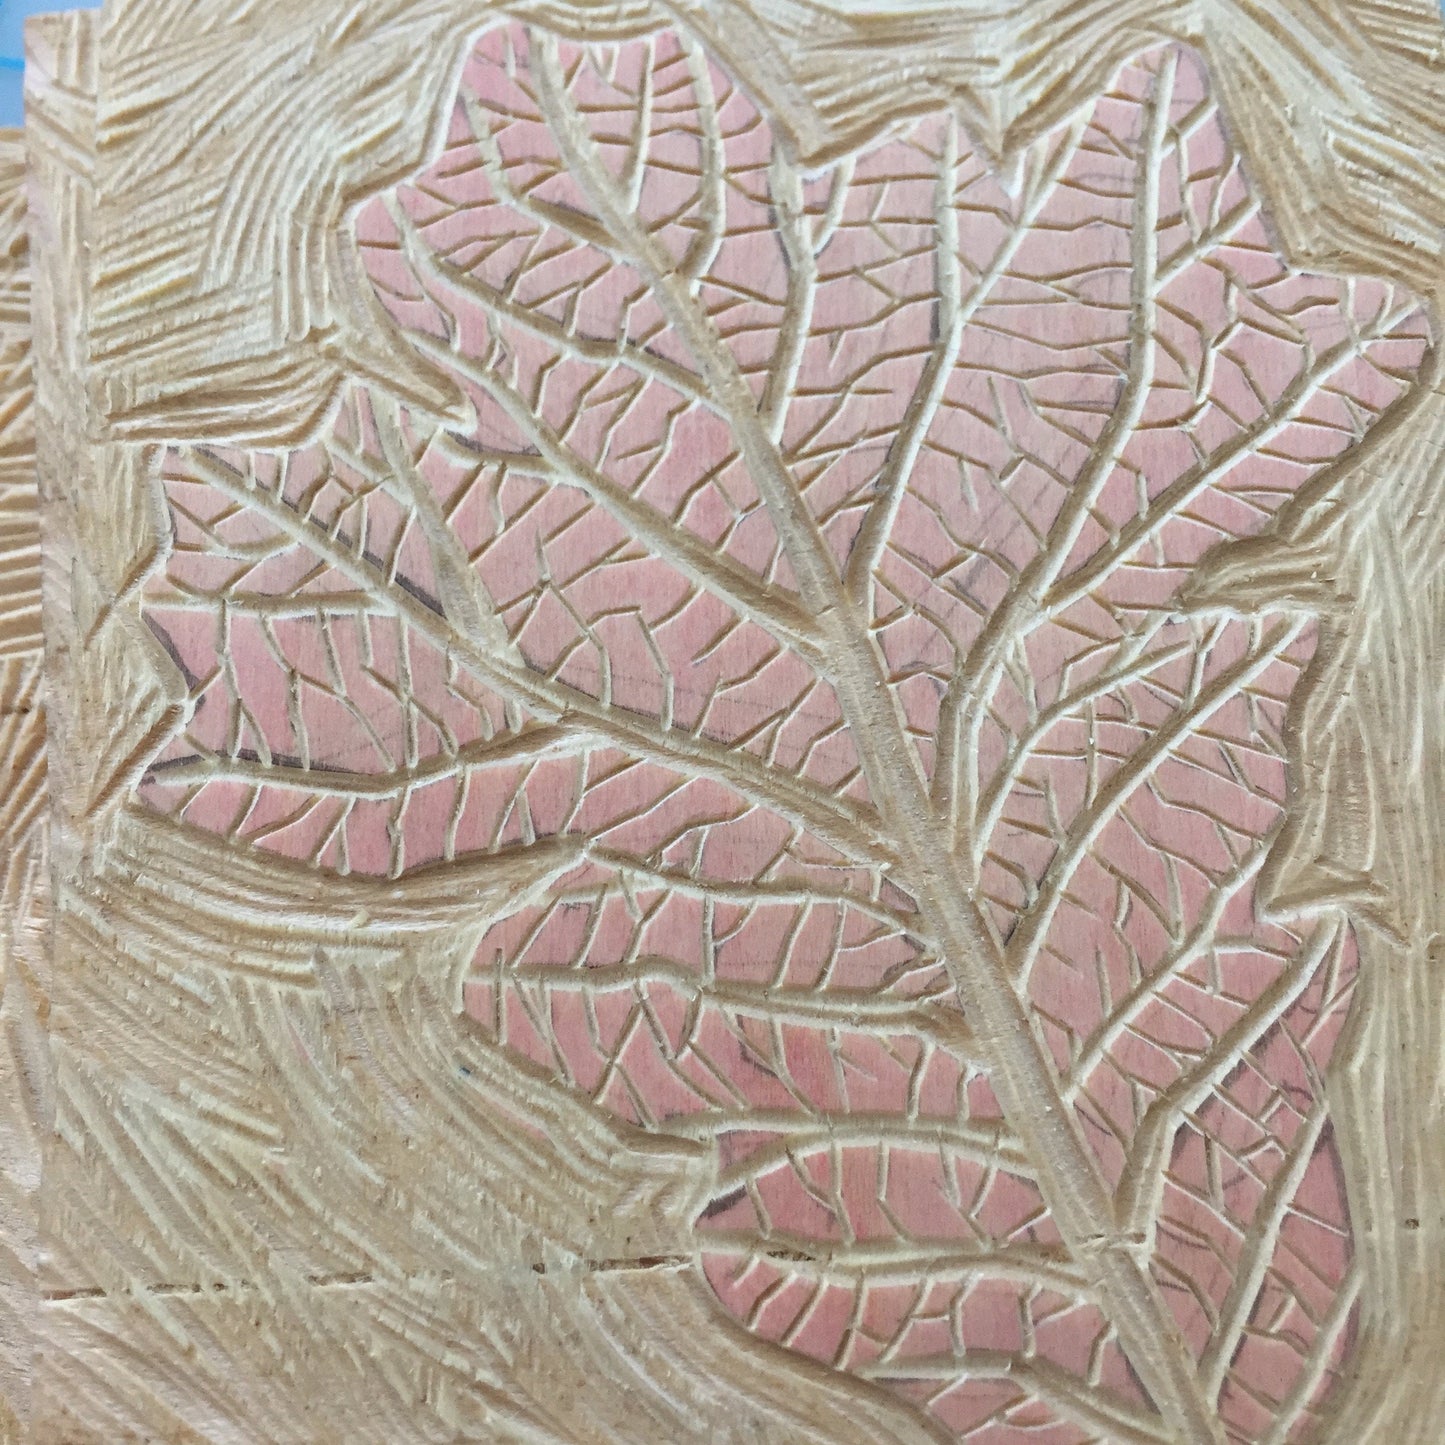 Bur Oak leaf FRAMED - woodblock print (11x14”)